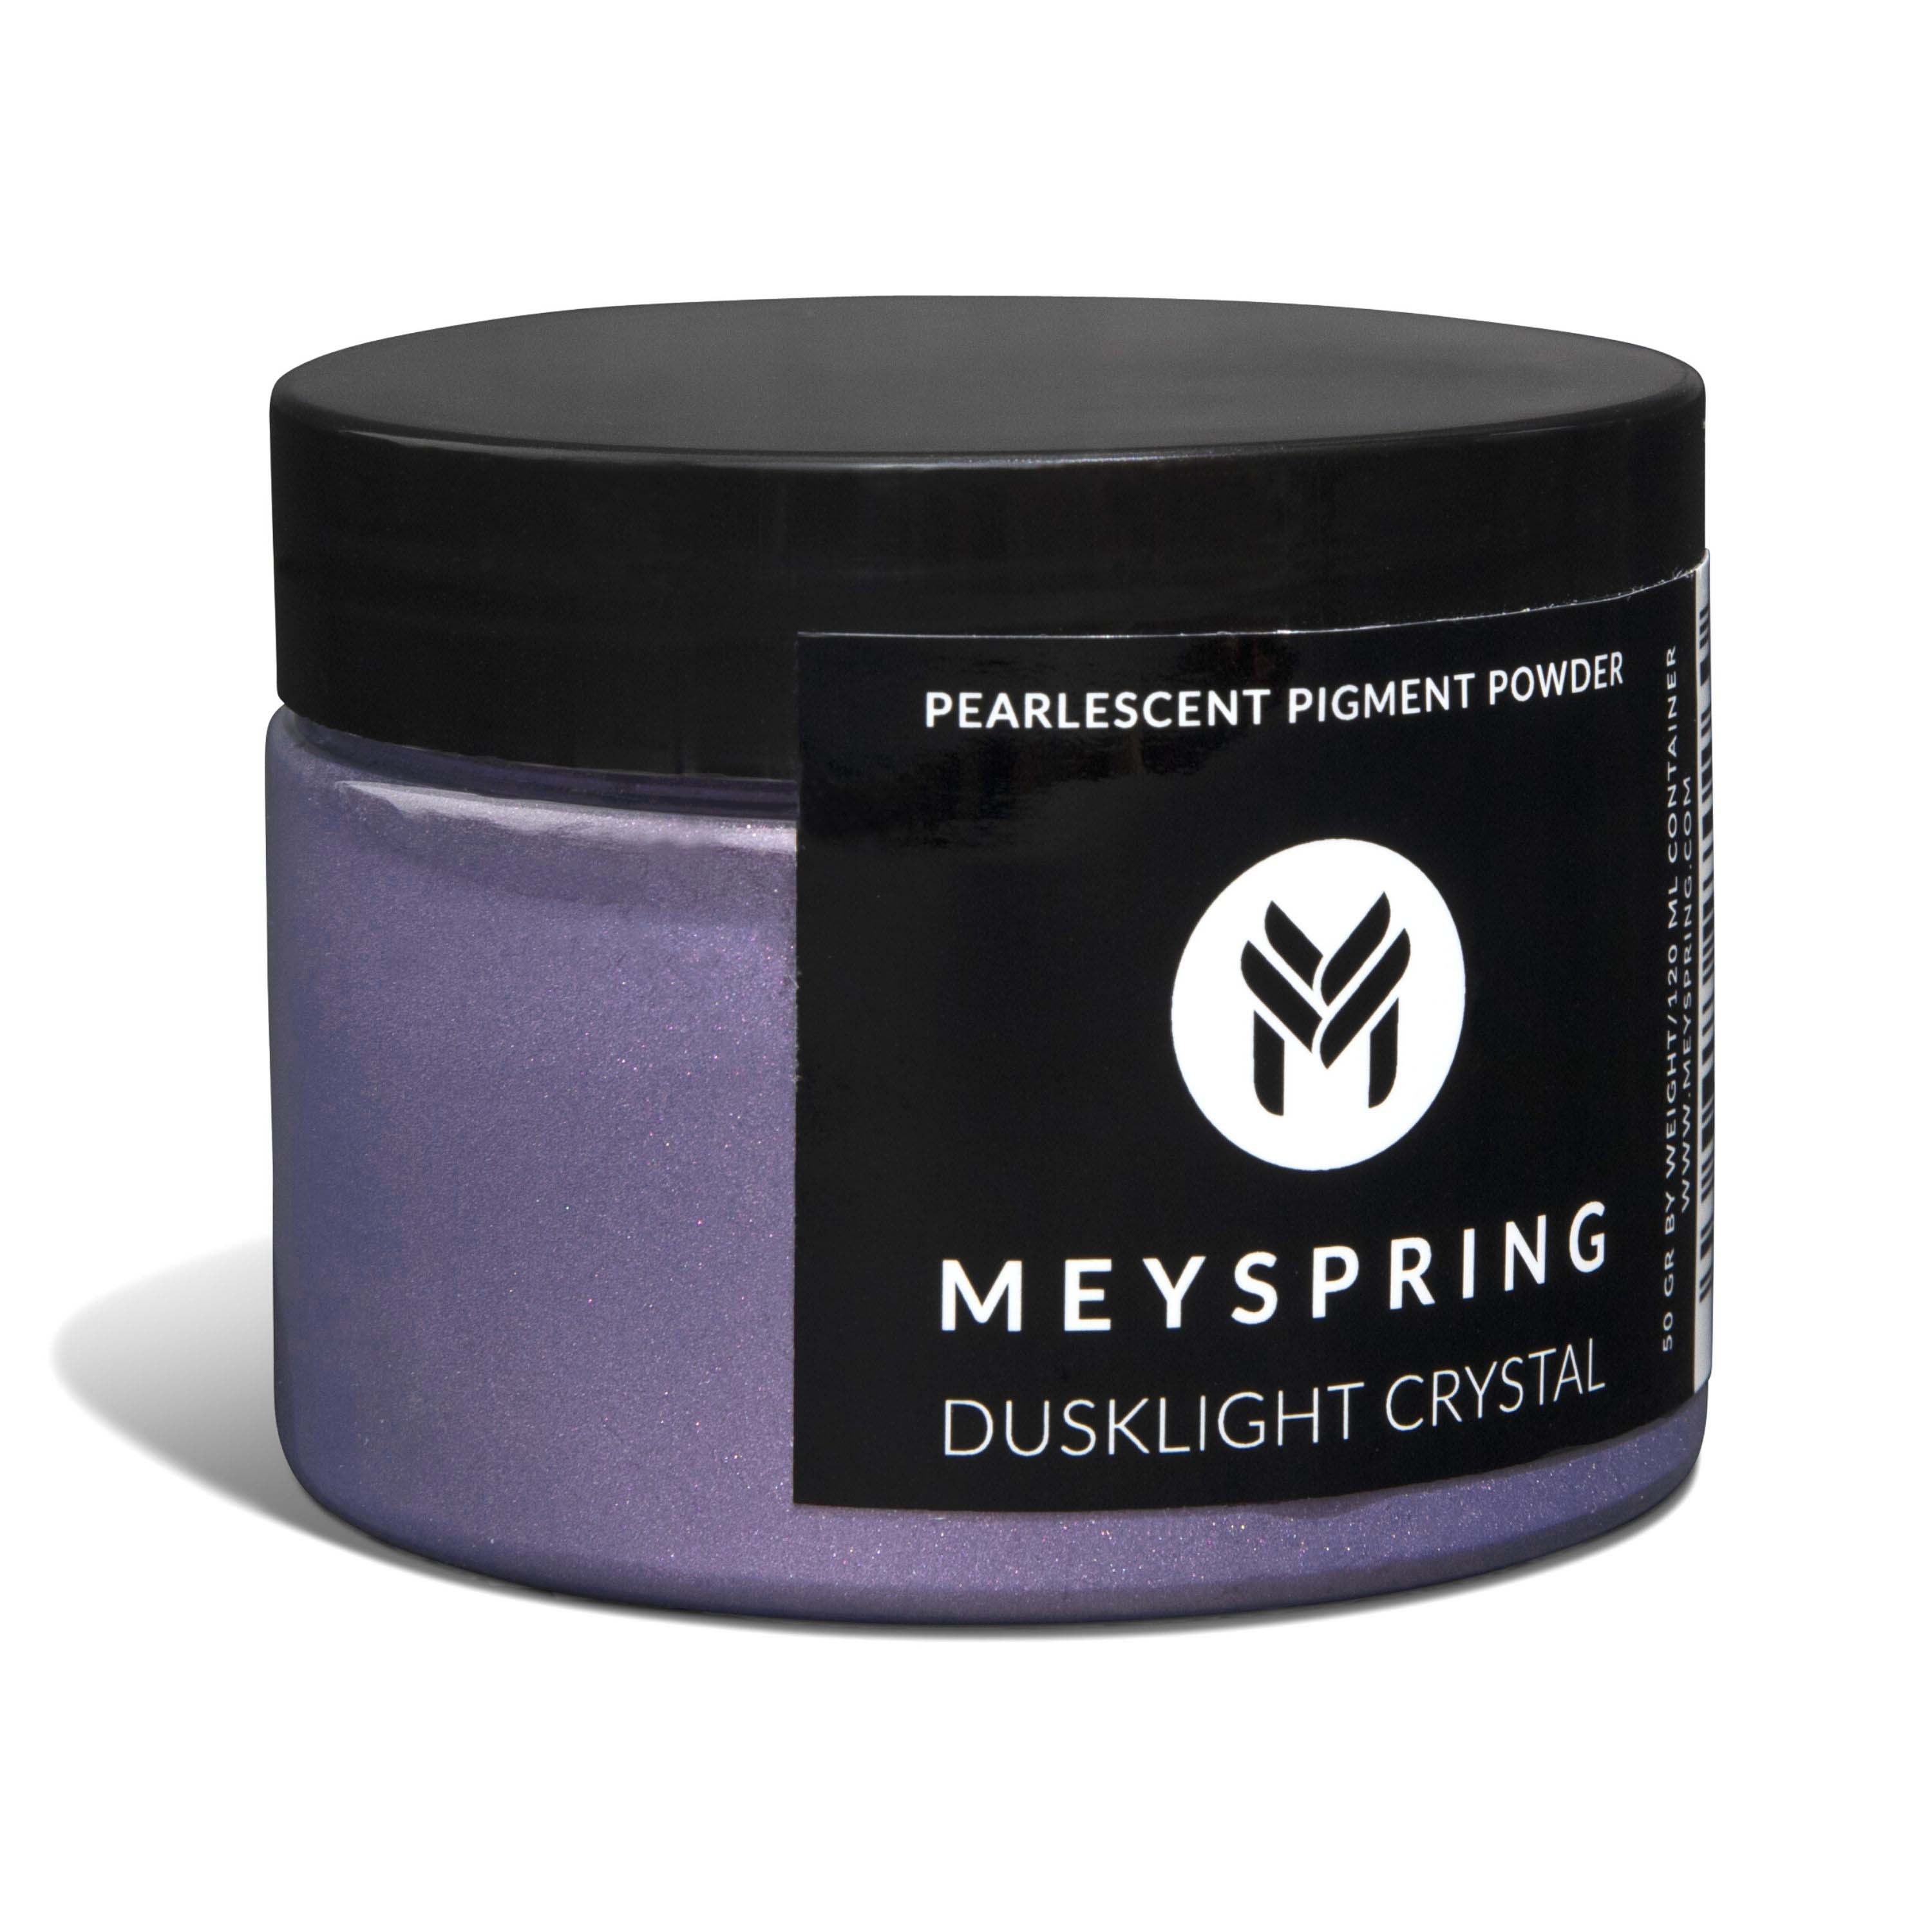 MEYSPRING Violet Crystal Epoxy Resin Color Pigment 50g Mica Powder for  Epoxy 